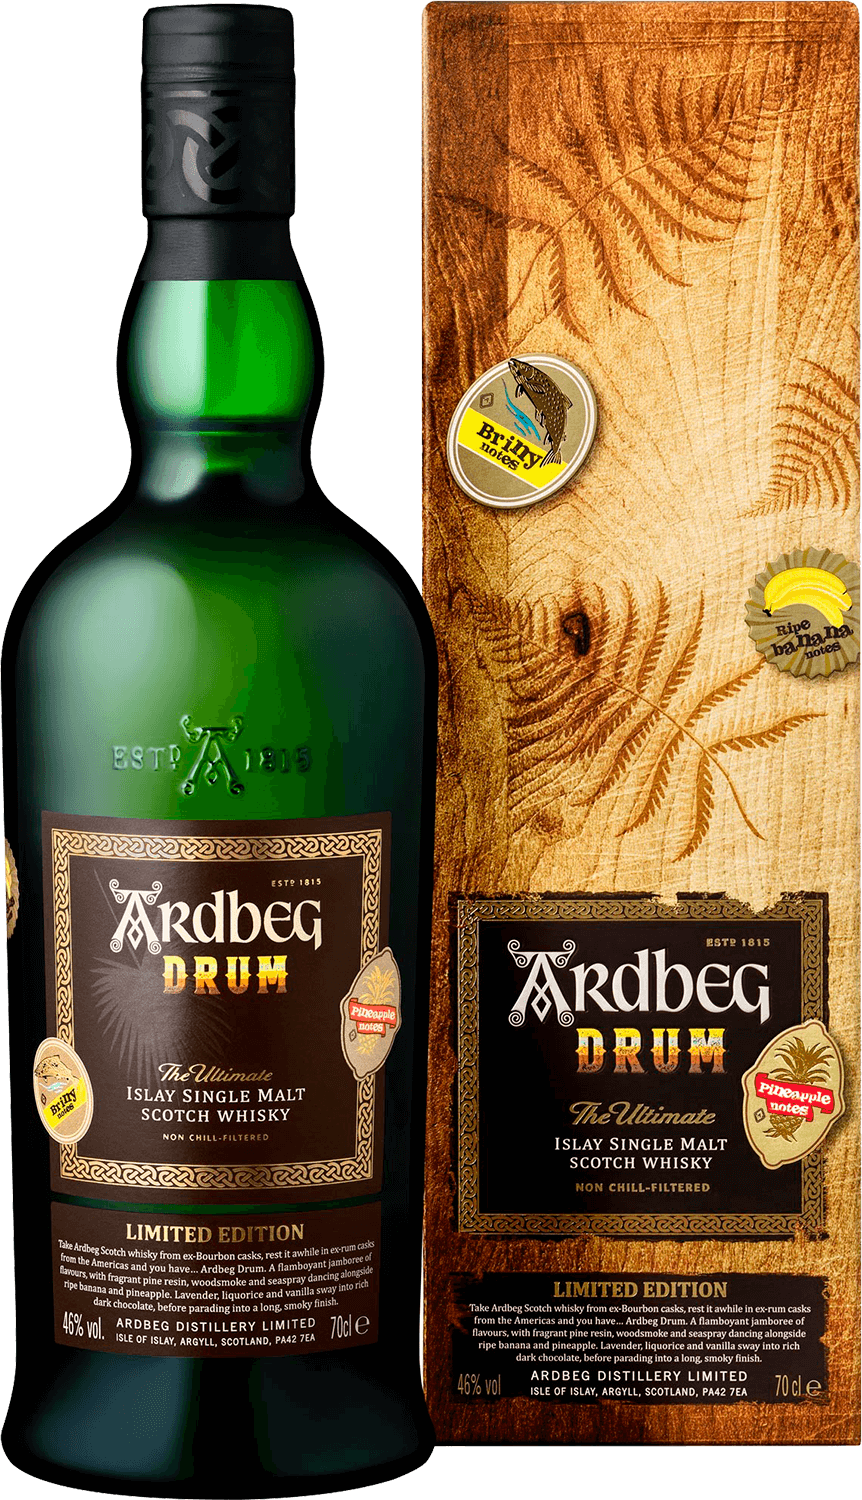 Ardbeg Drum Islay Single Malt Scotch Whisky (gift box) bowmore 15 y o islay single malt scotch whisky gift box